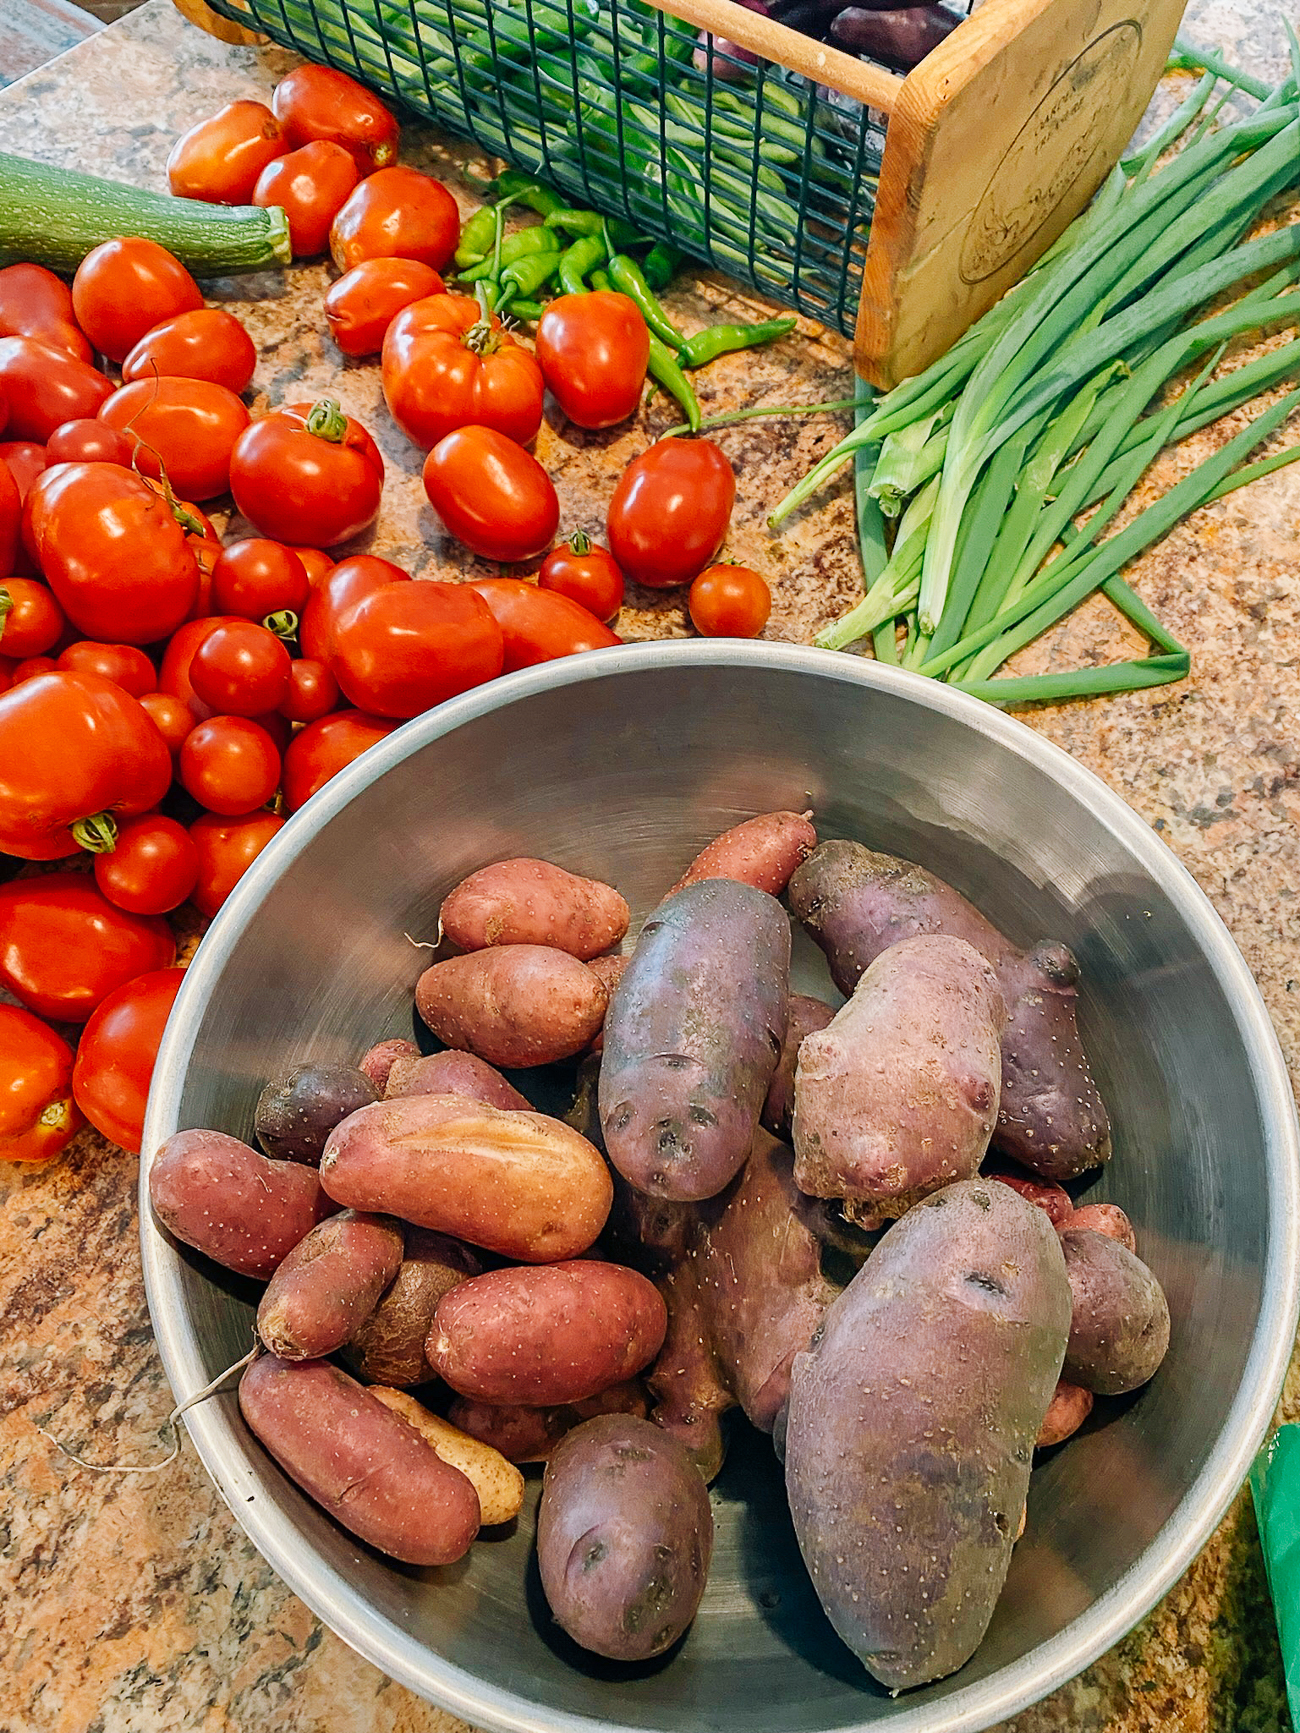 Tomato and potato harvest